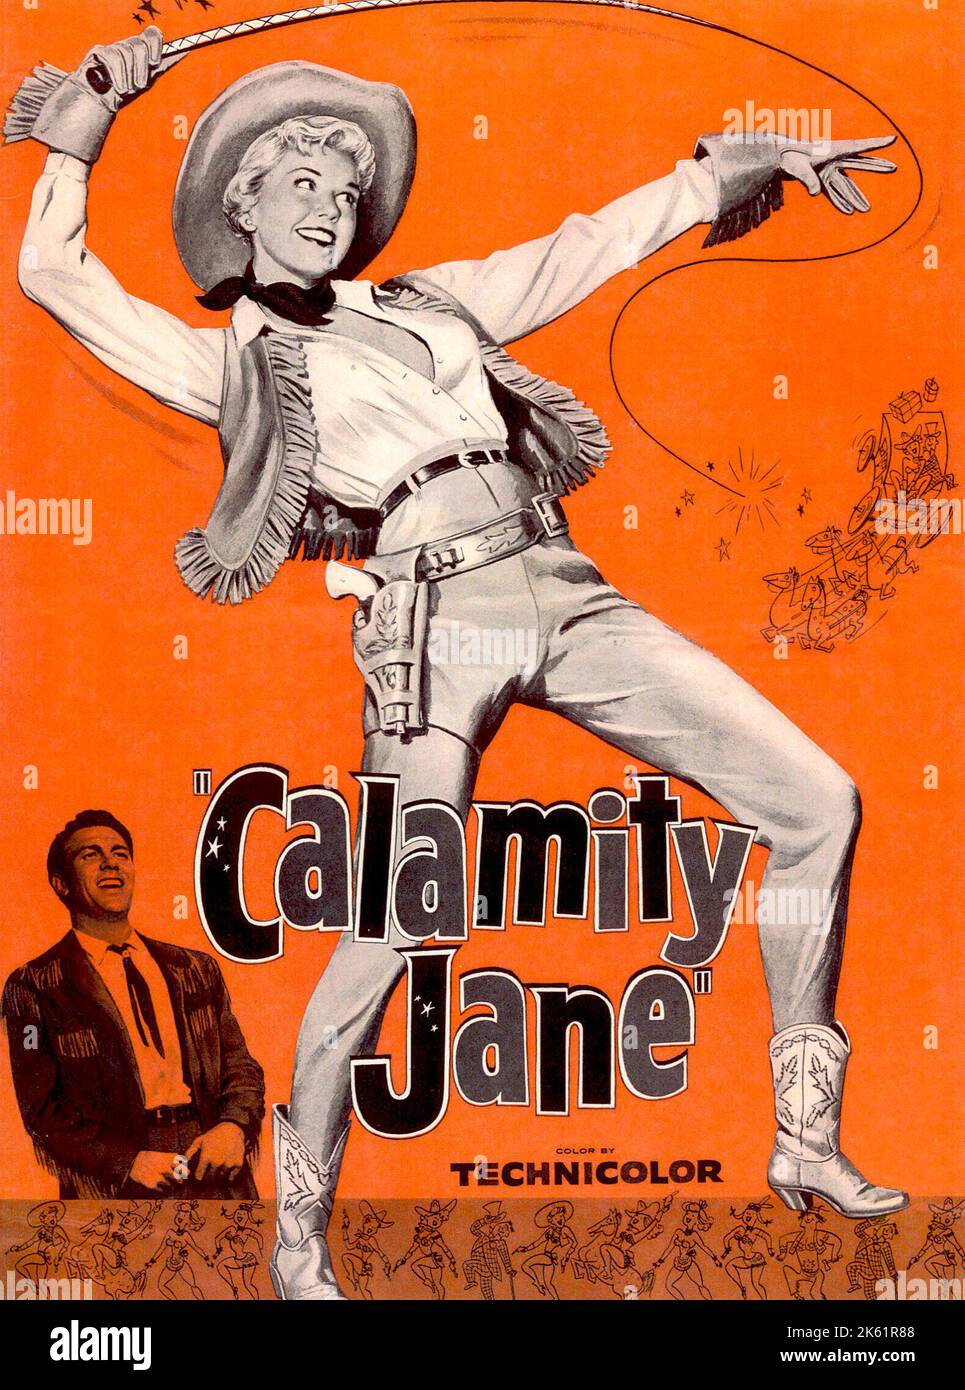 Calamity Jane 1953 Movie Poster Stock Photo